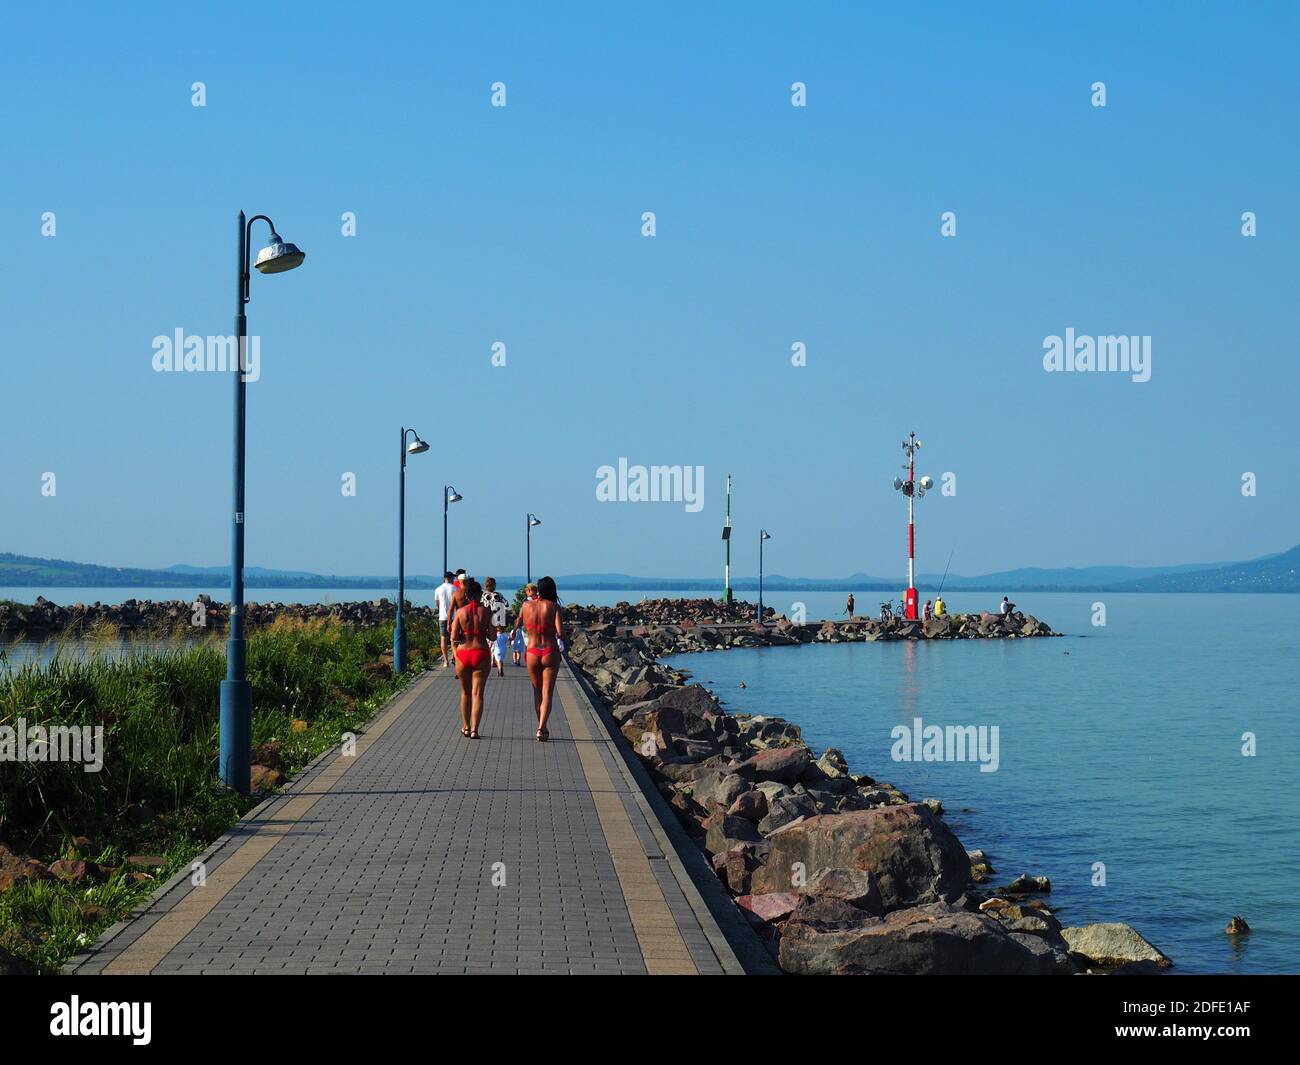 Balatonmáriafürdő, Hungary - July 30, 2020: Women in red bikini walking on the pier at a canal of the lake Balaton Stock Photo